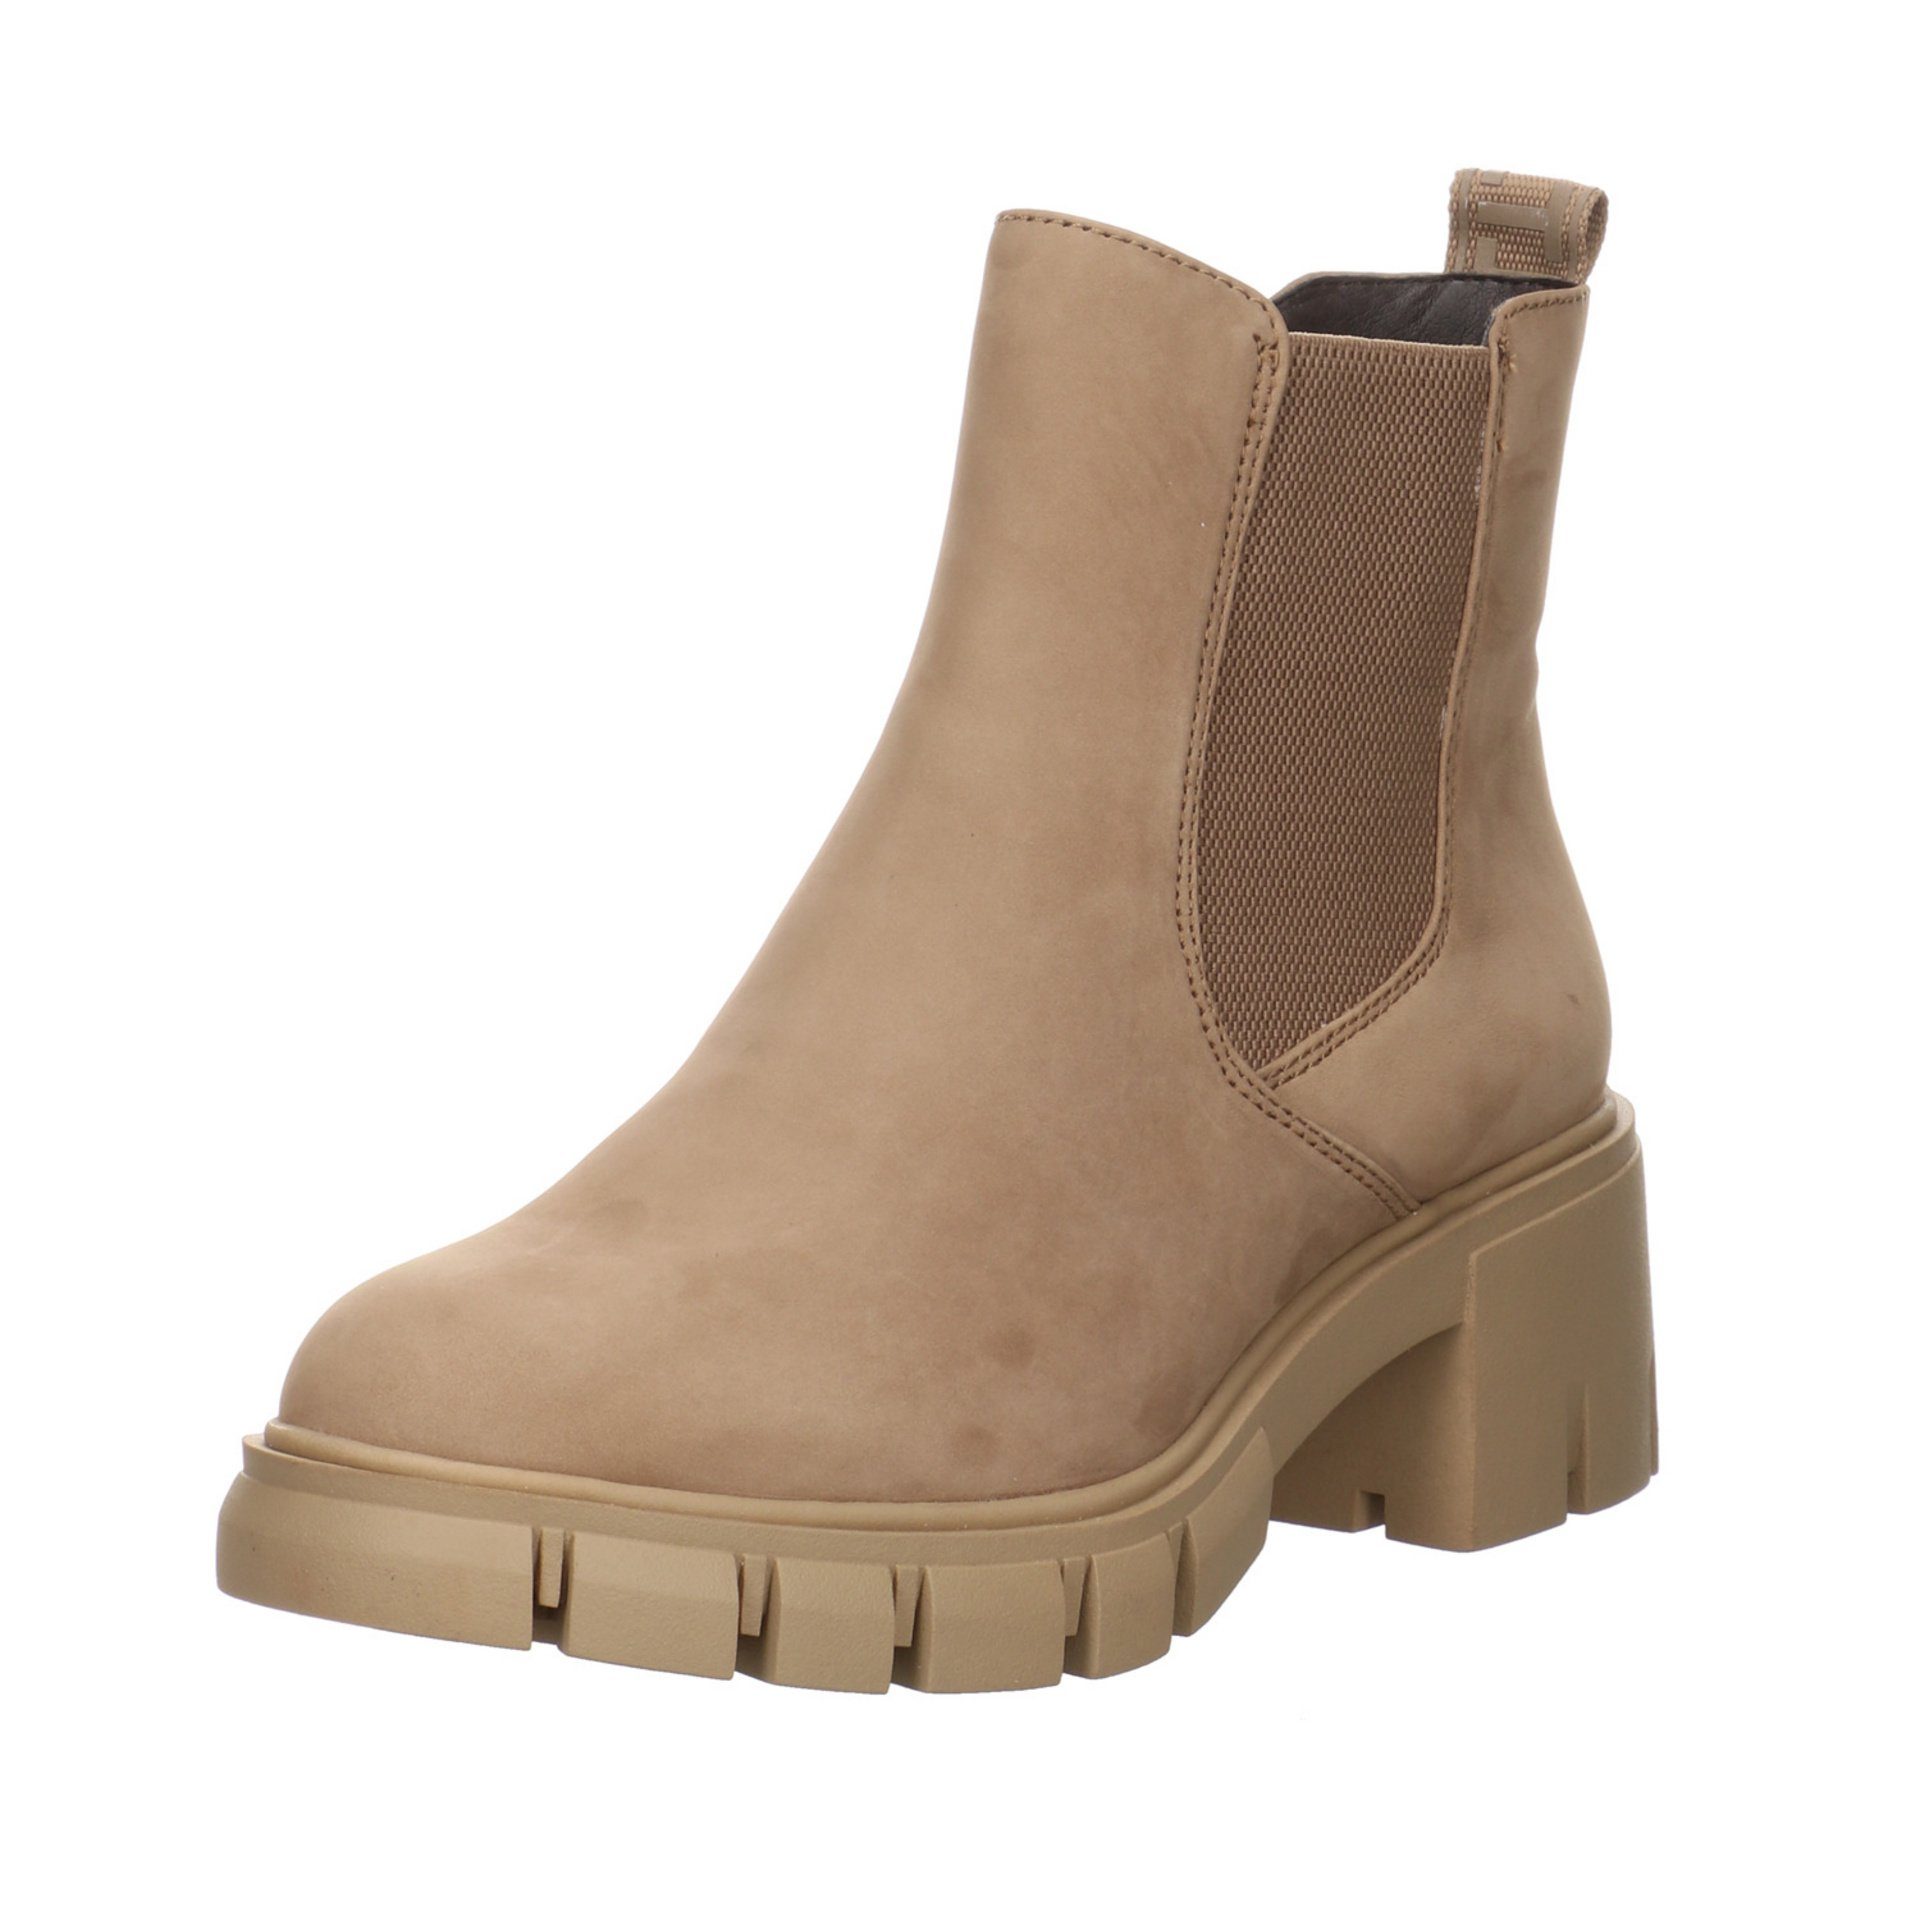 (21203969) Schuhe Boots Stiefelette Leder-/Textilkombination Tamaris Beige Chelsea Damen Stiefeletten